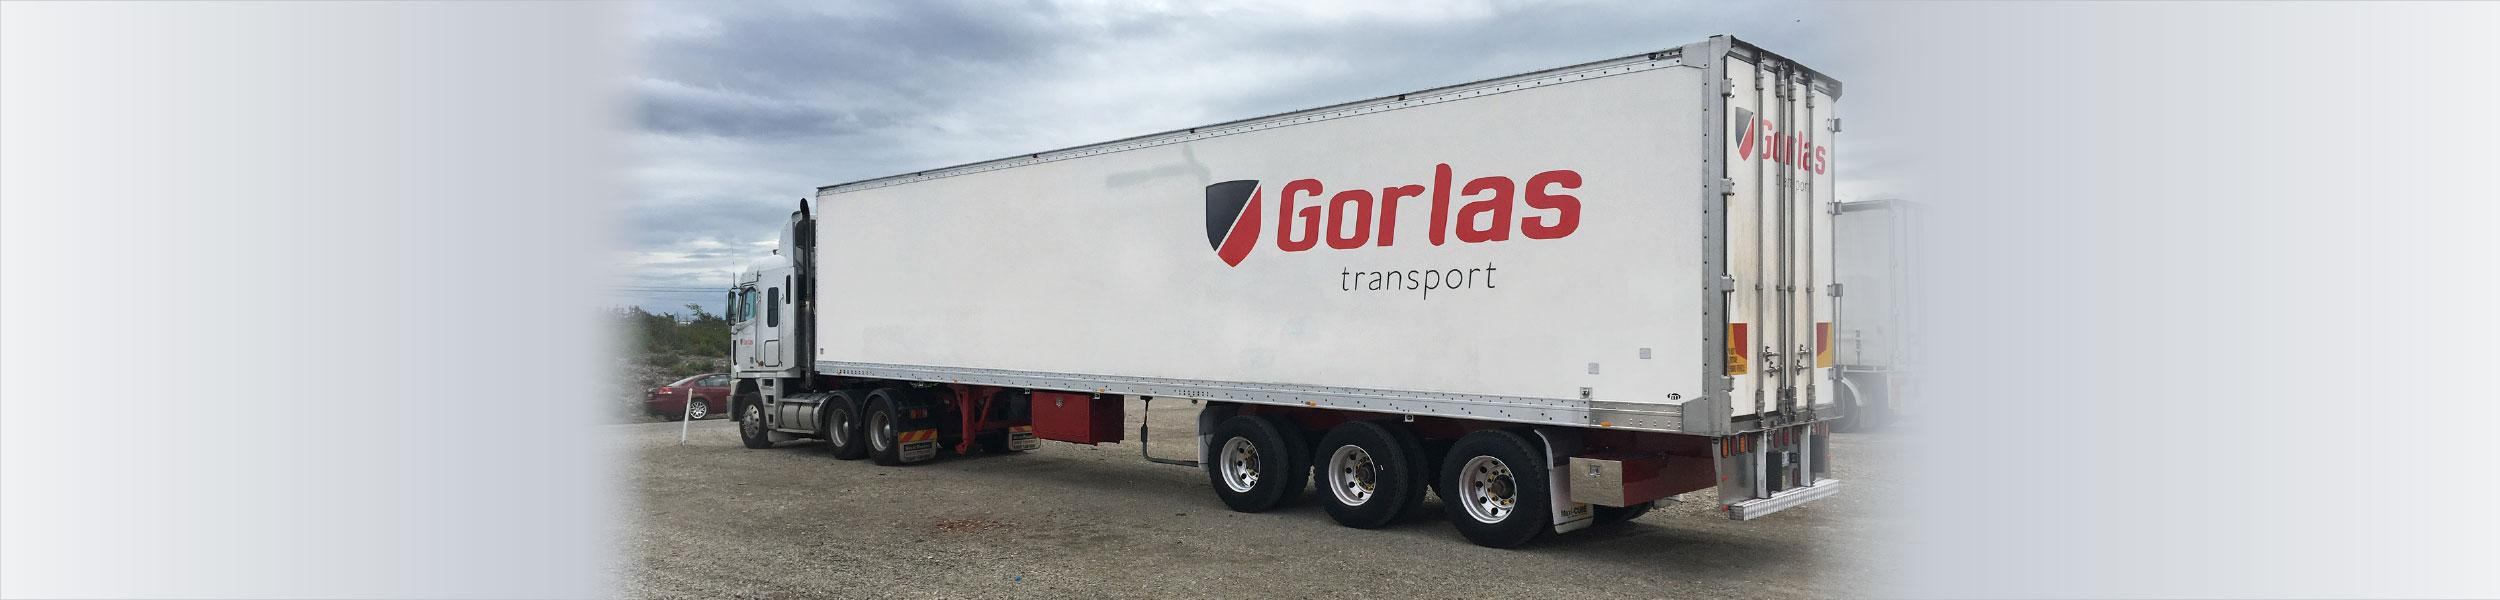 Contract Fleet Logistics - Gorlas Transport